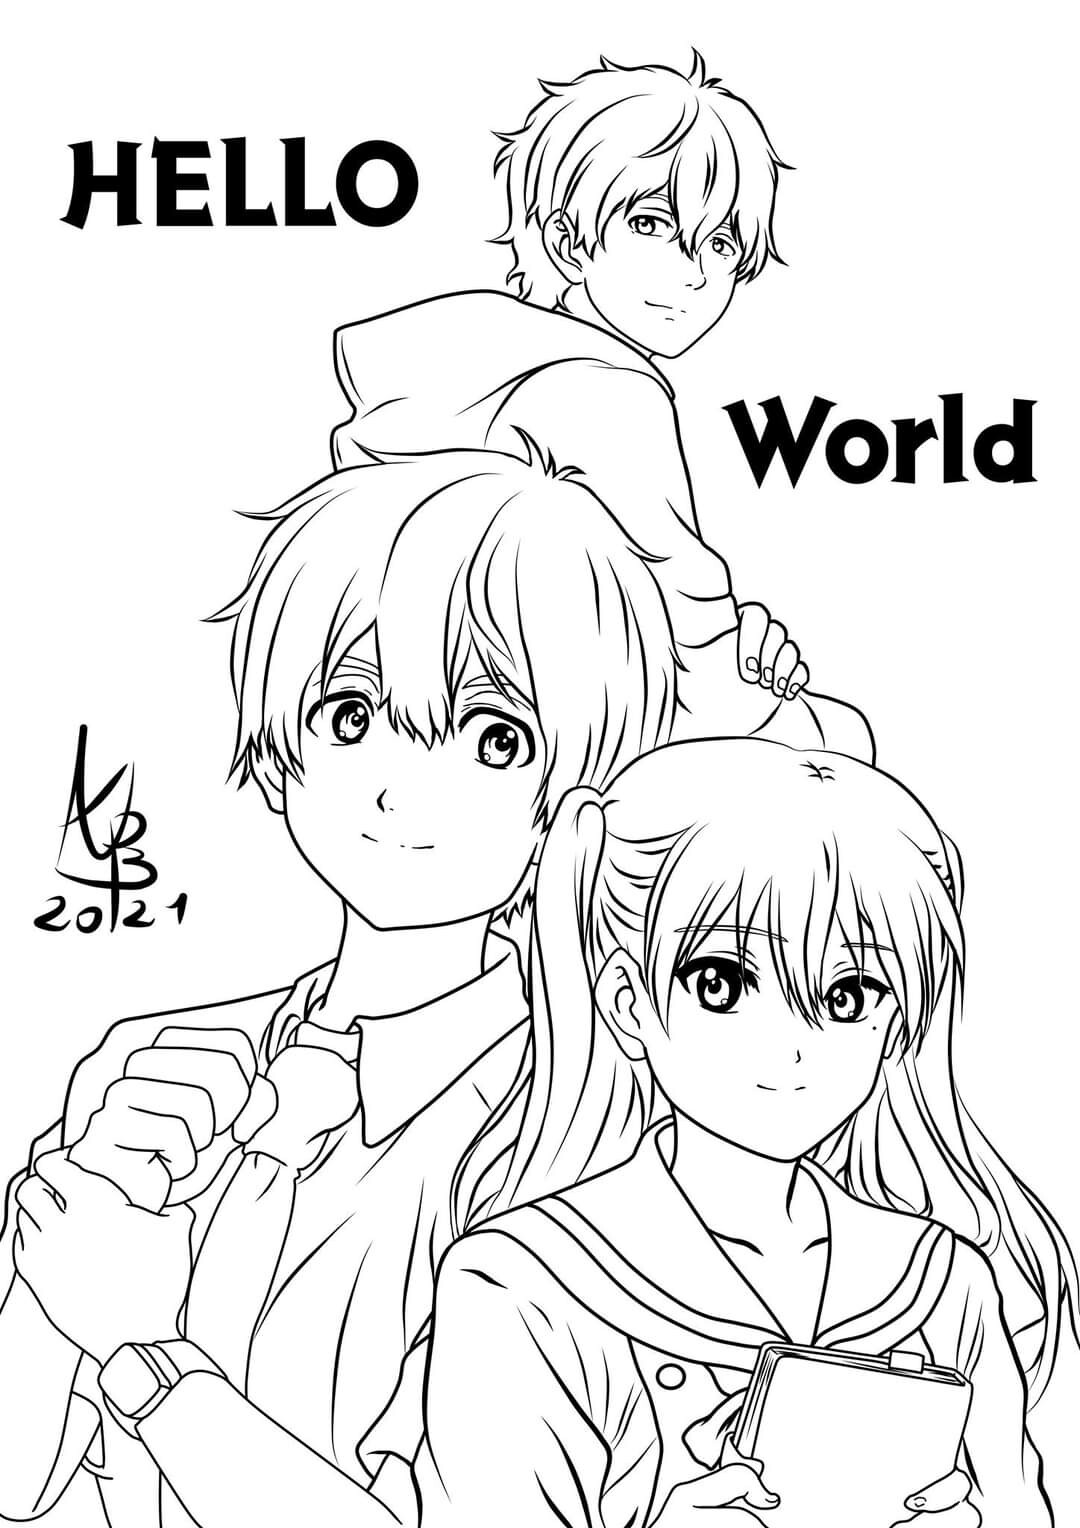 ArtStation - Hello world movie anime tribute